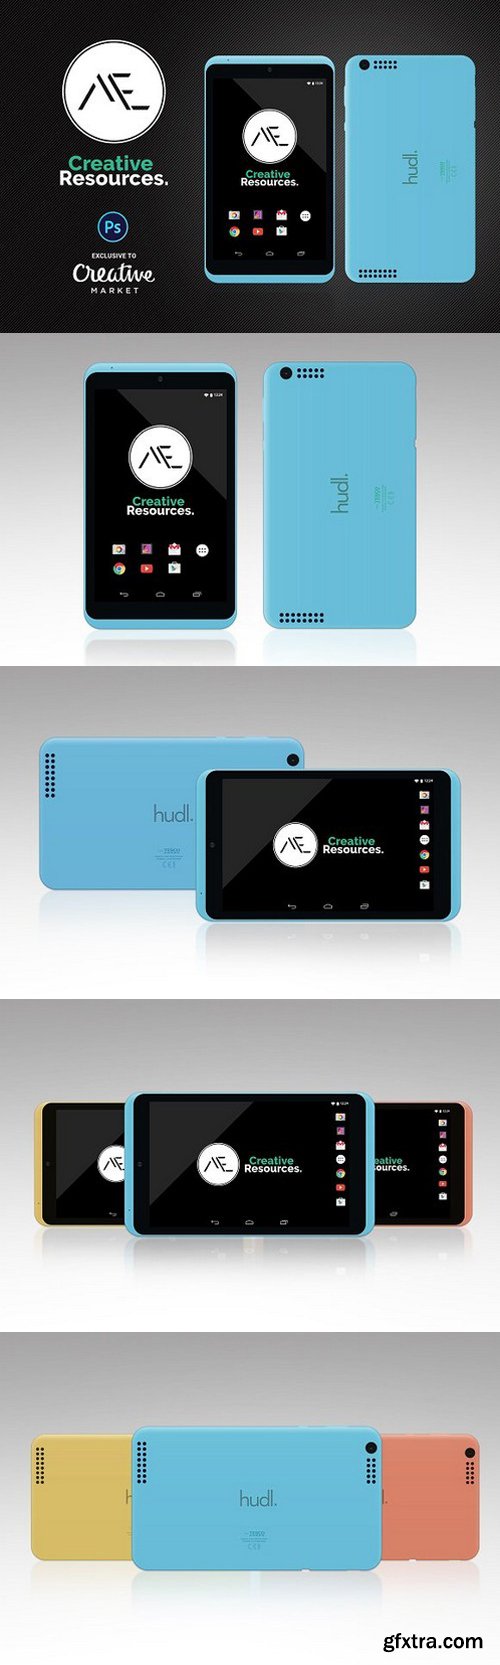 CM - Tesco Hudl 2 Android Tablet 1480536